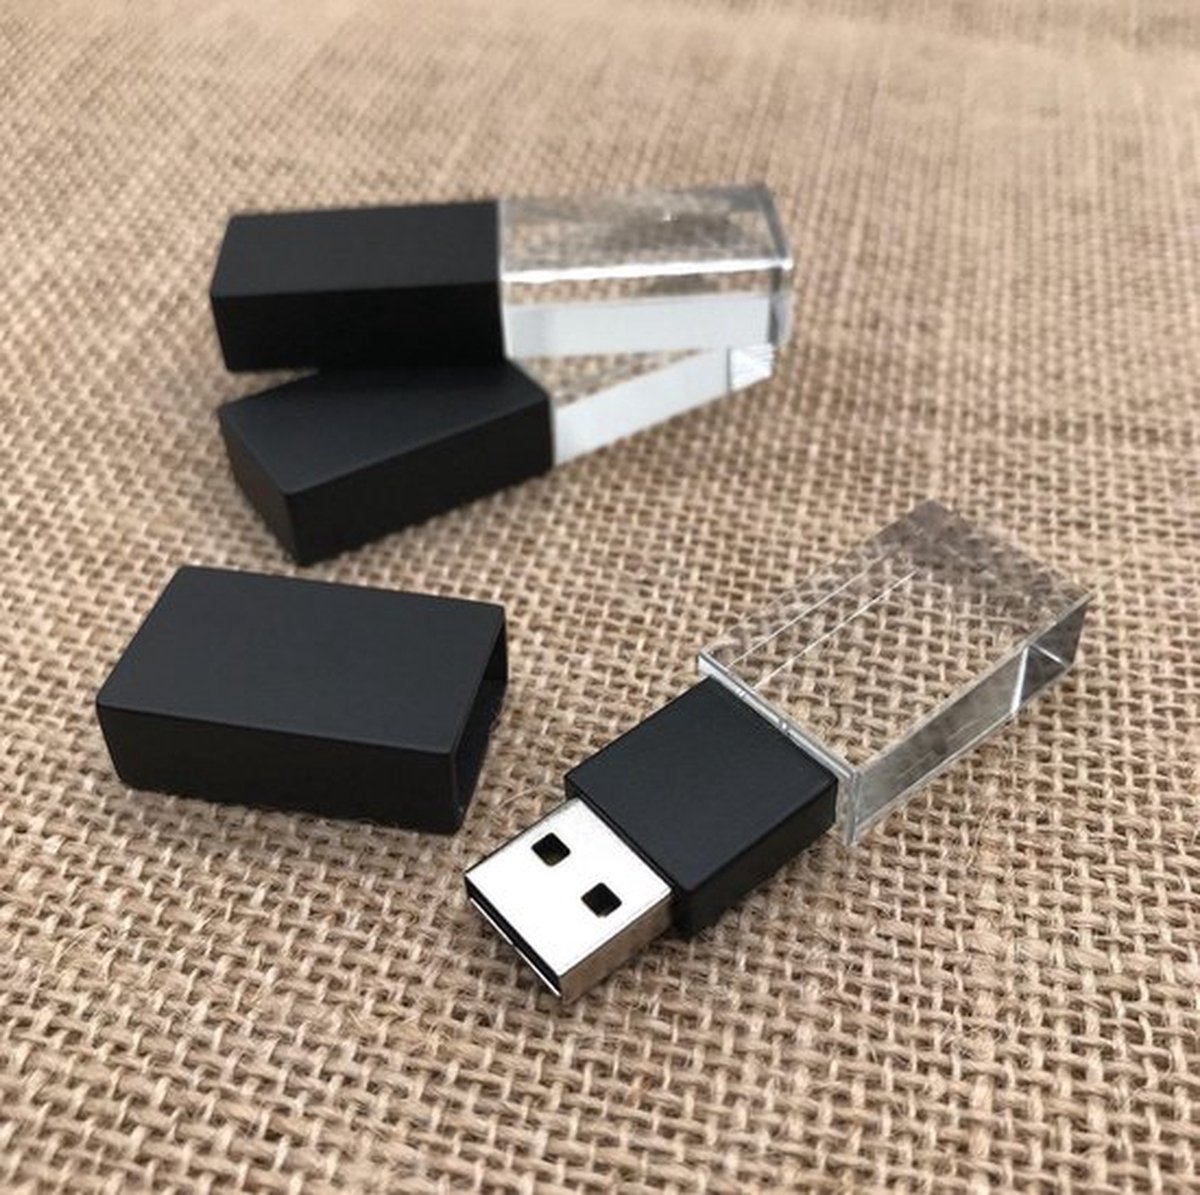 Kristal 128GB 3.0 USB stick met zwart metale dop - Glas usb stick, glazen usb stick,